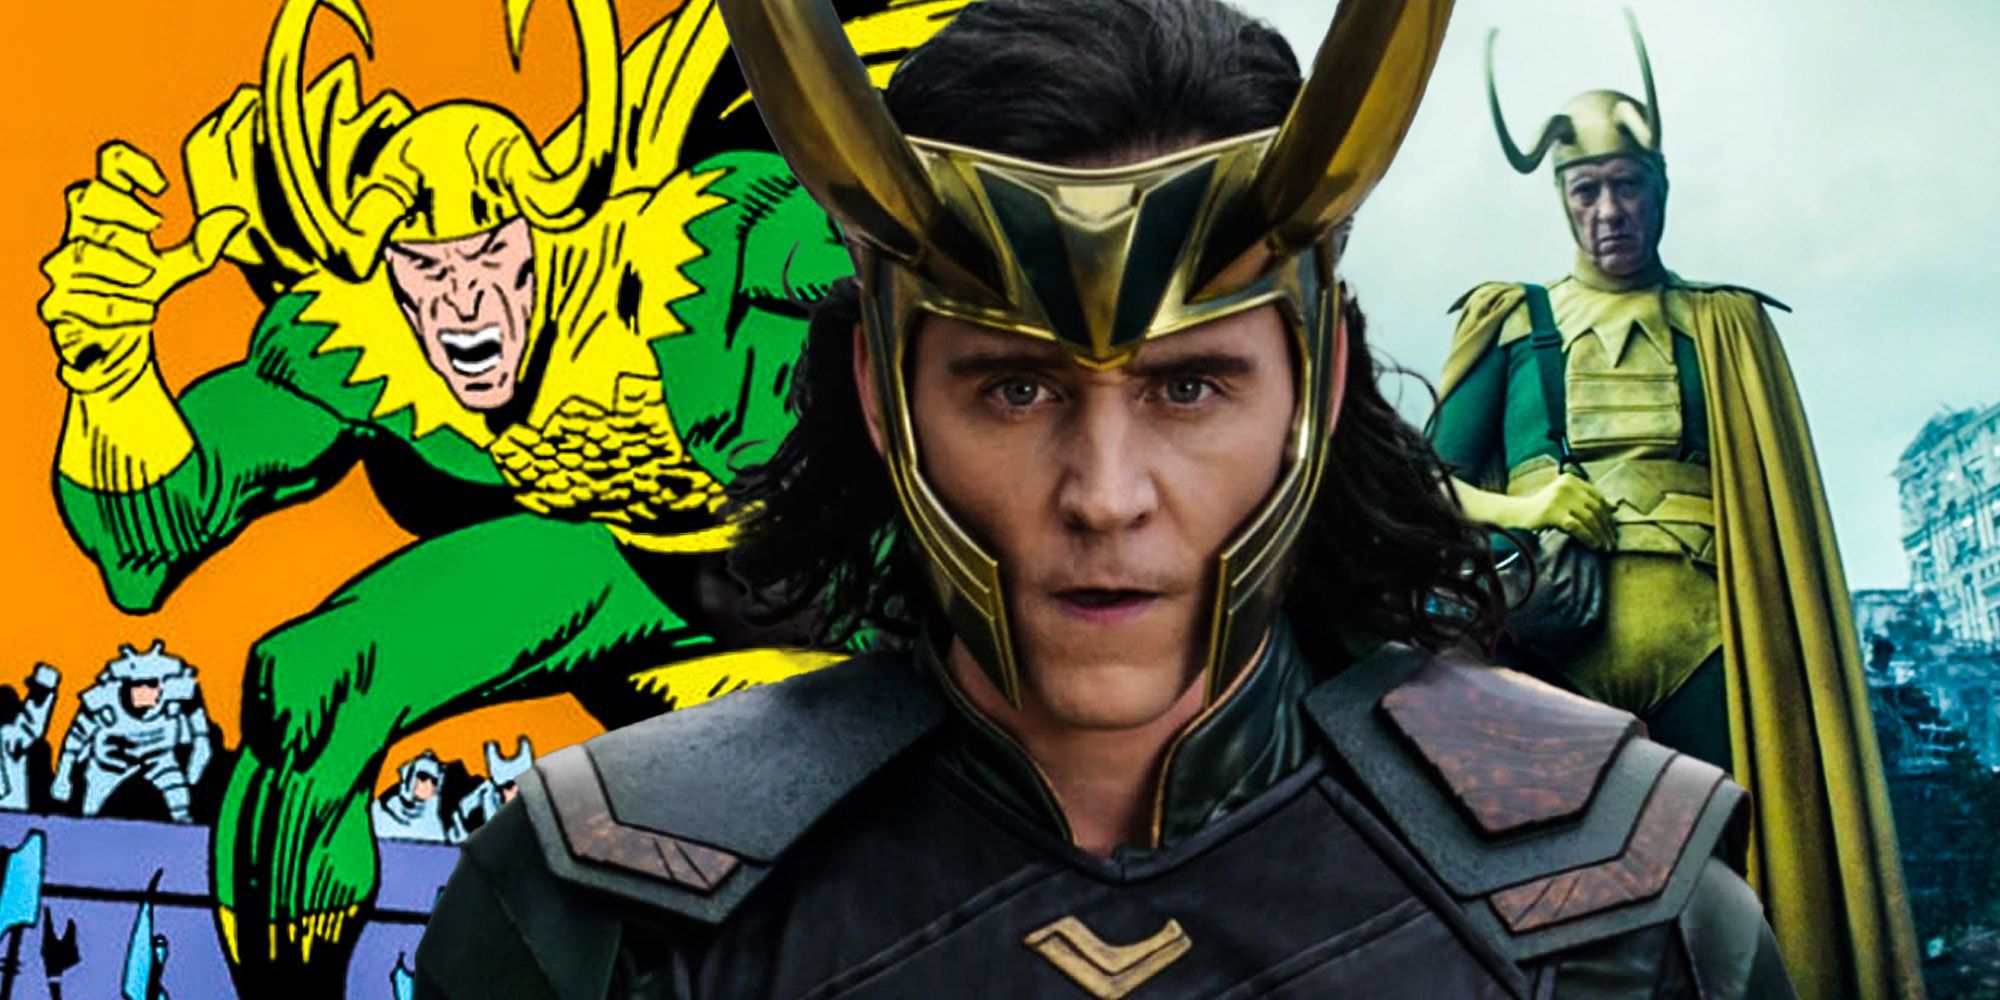 Split image of Loki from comics and Richard E Grant Loki from MCU